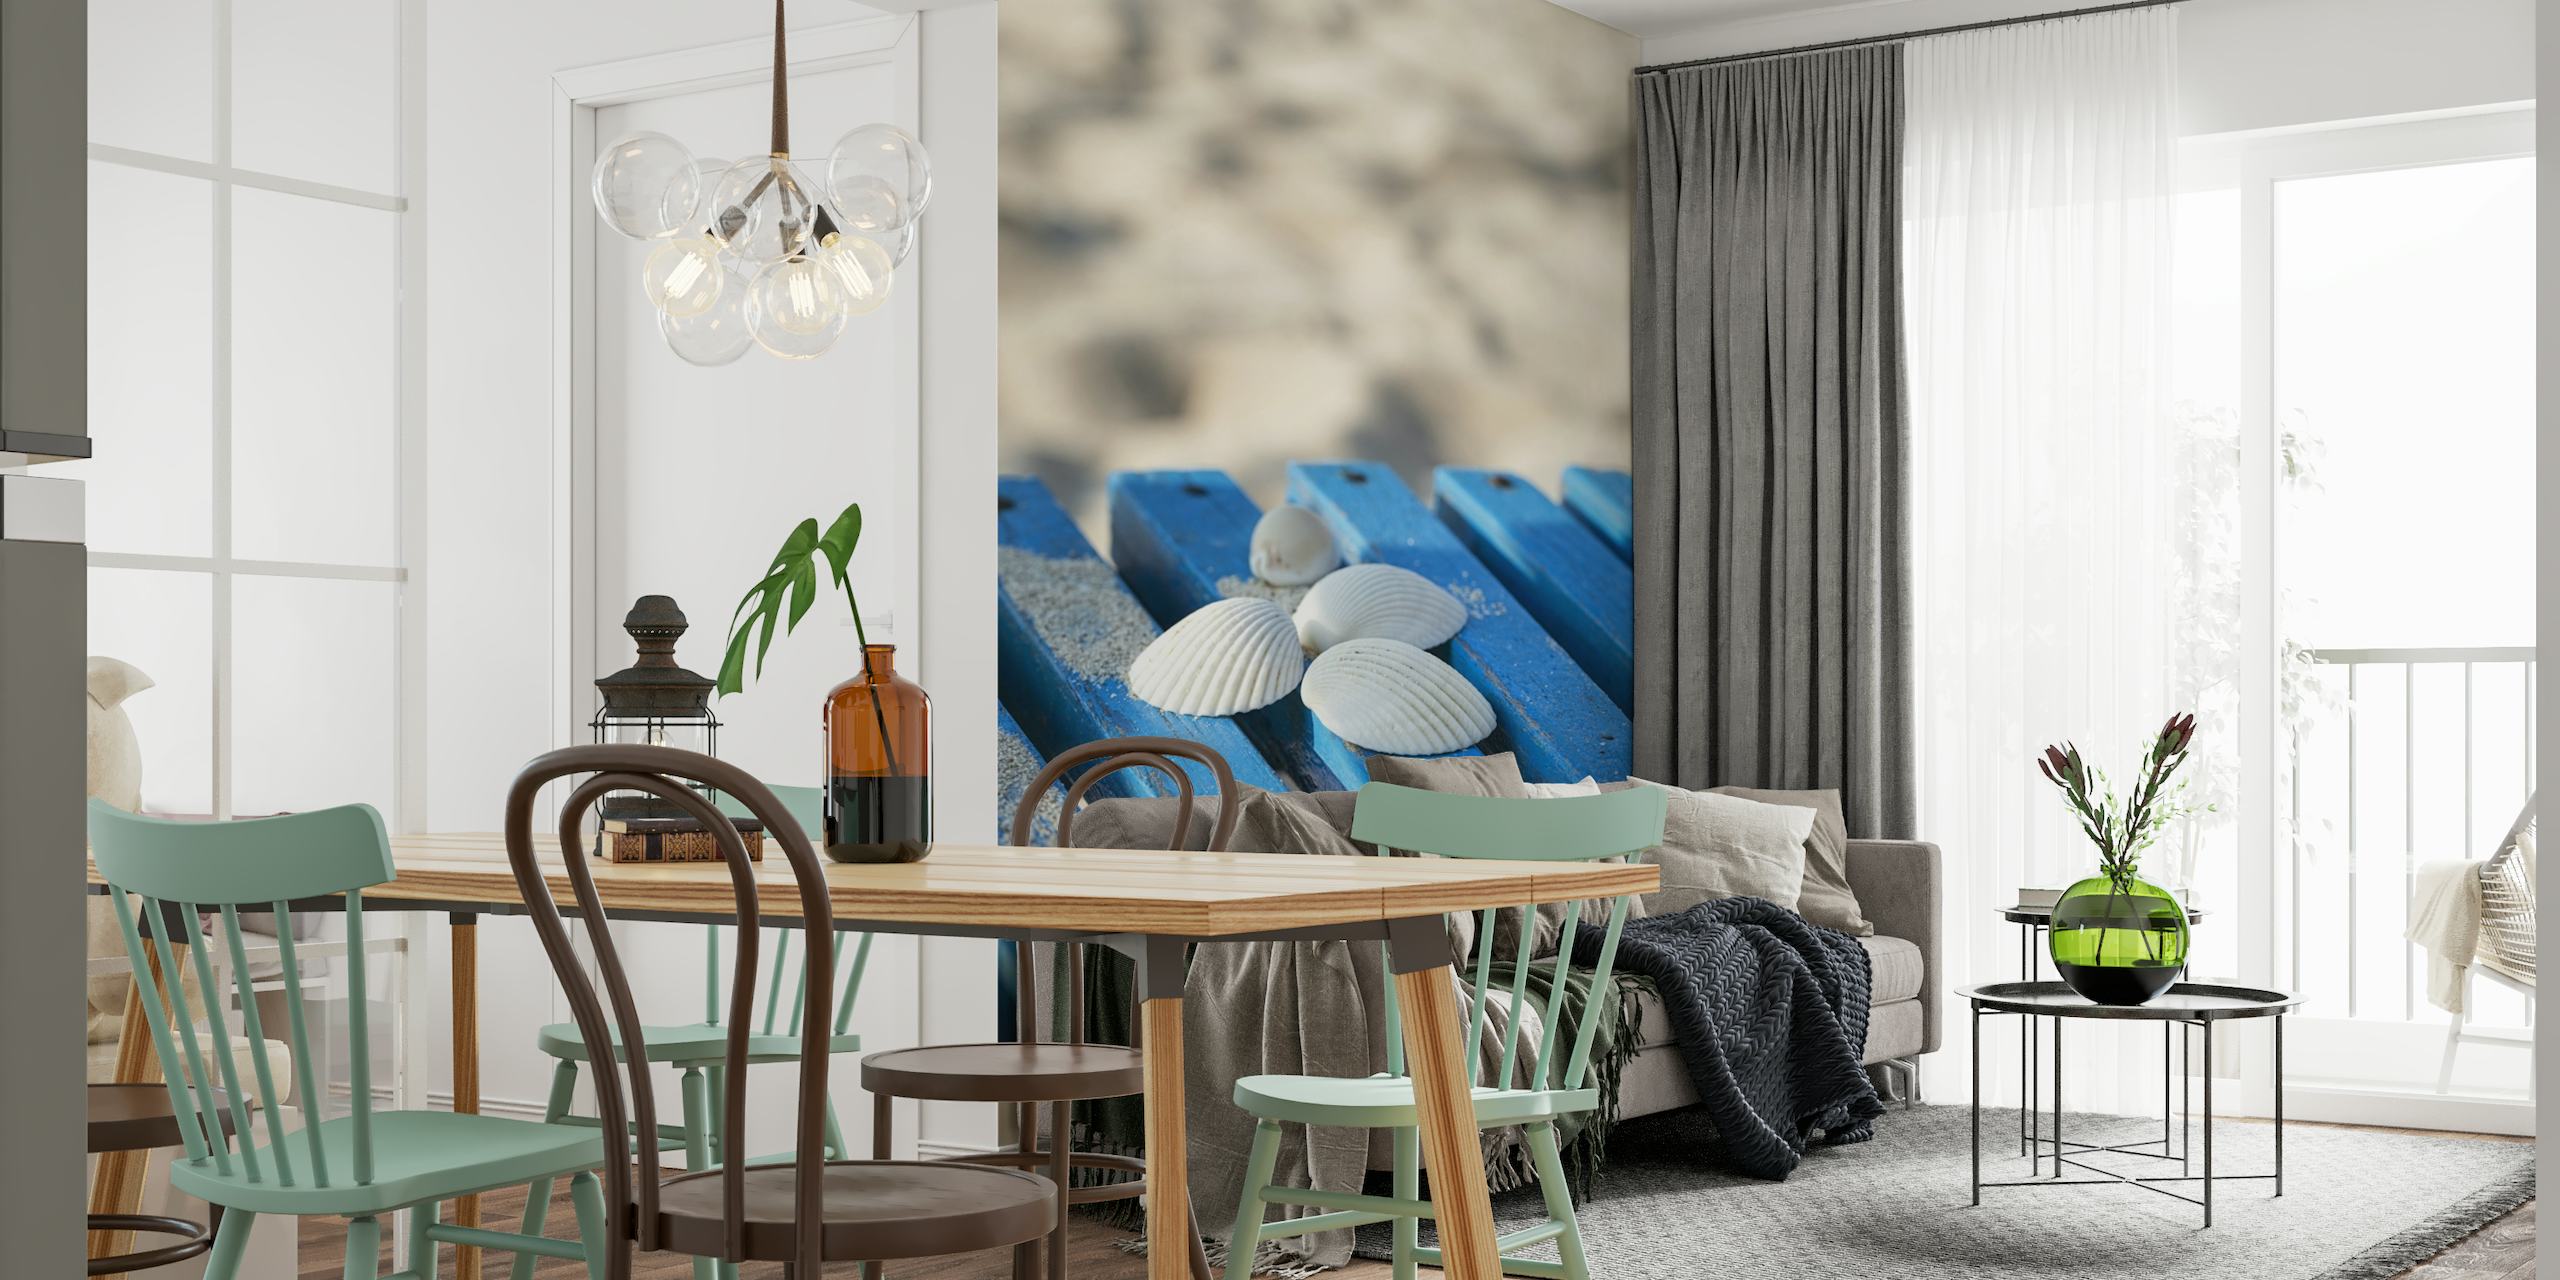 White Shells On A Blue Chair wallpaper